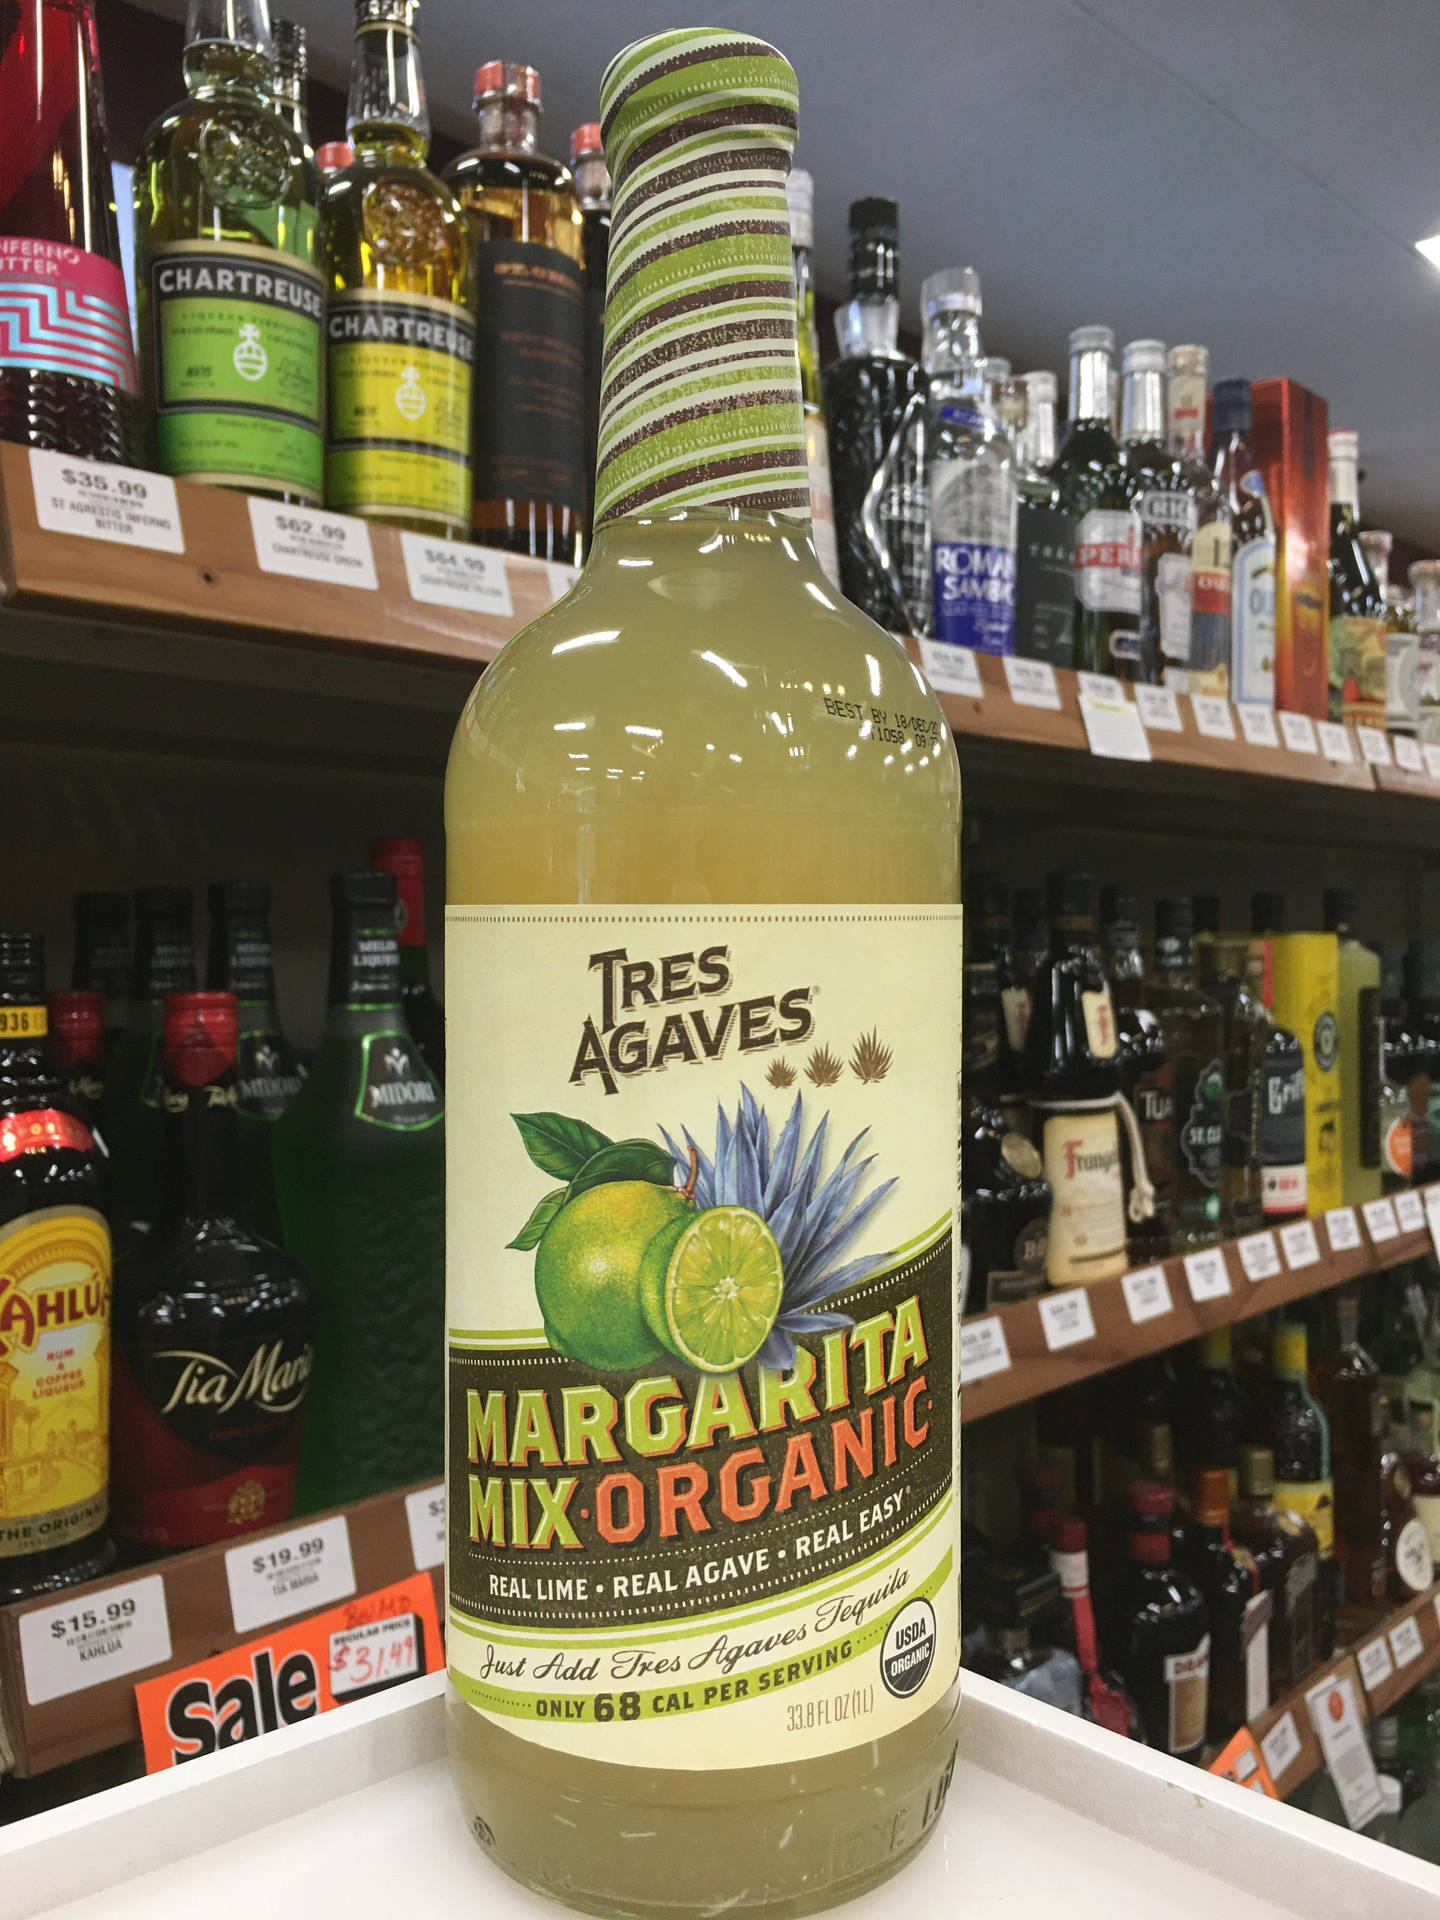 Tresagaves Mix Di Margarita Organica In Giallo Vibrante Sfondo